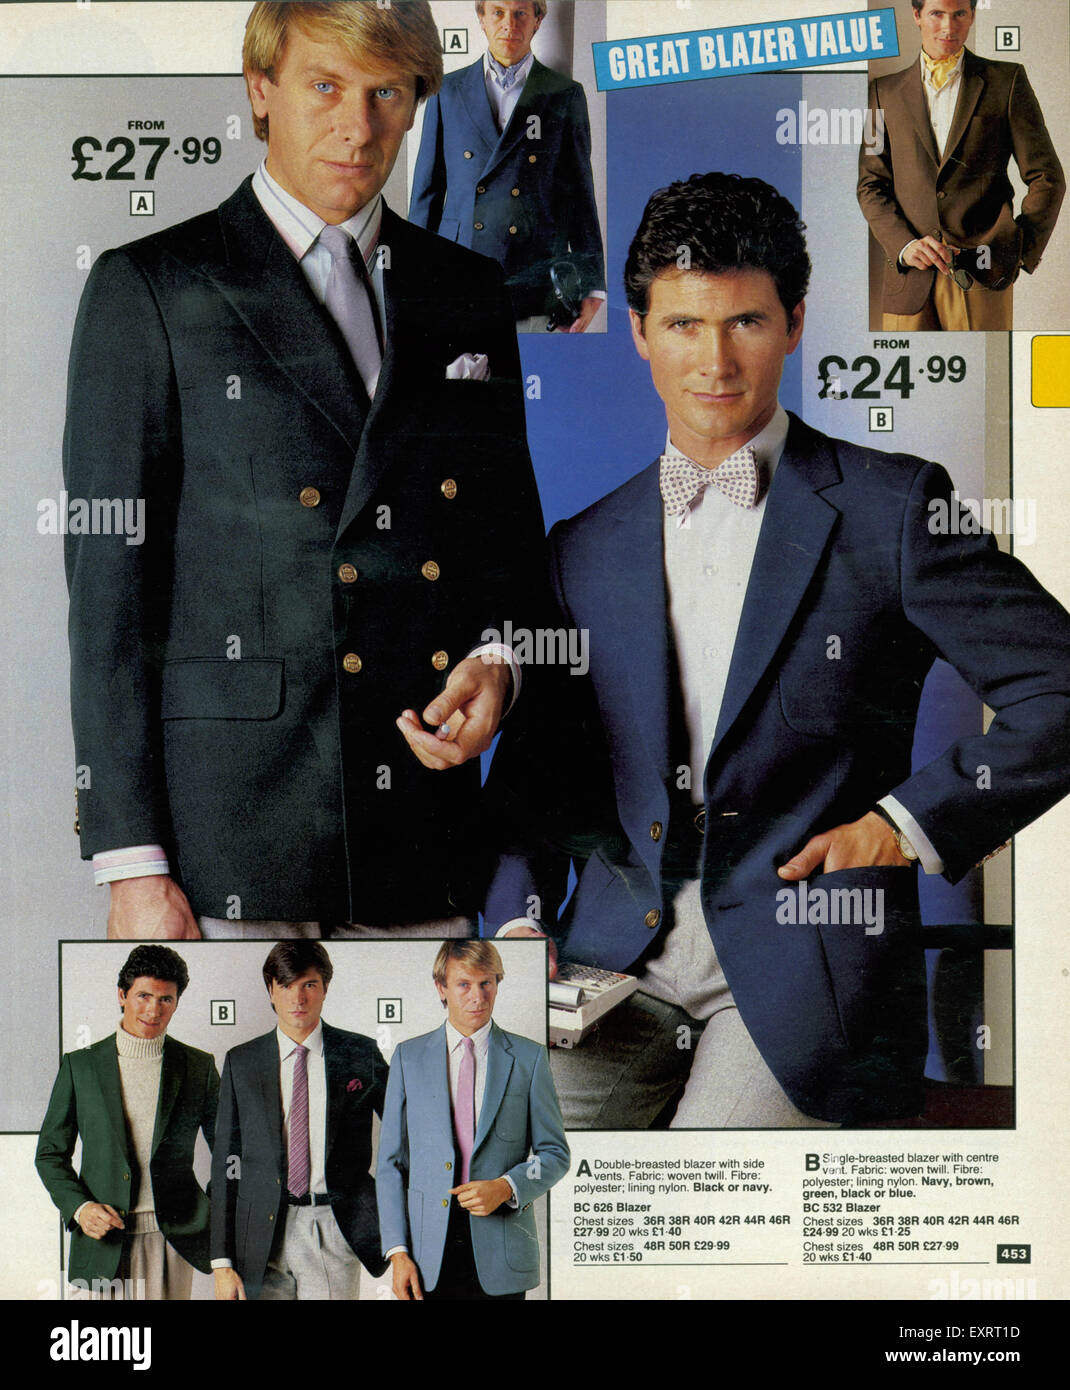 1980s UK Mens Fashion 1980s Catalogue/ Brochure Plate Stock Photo - Alamy